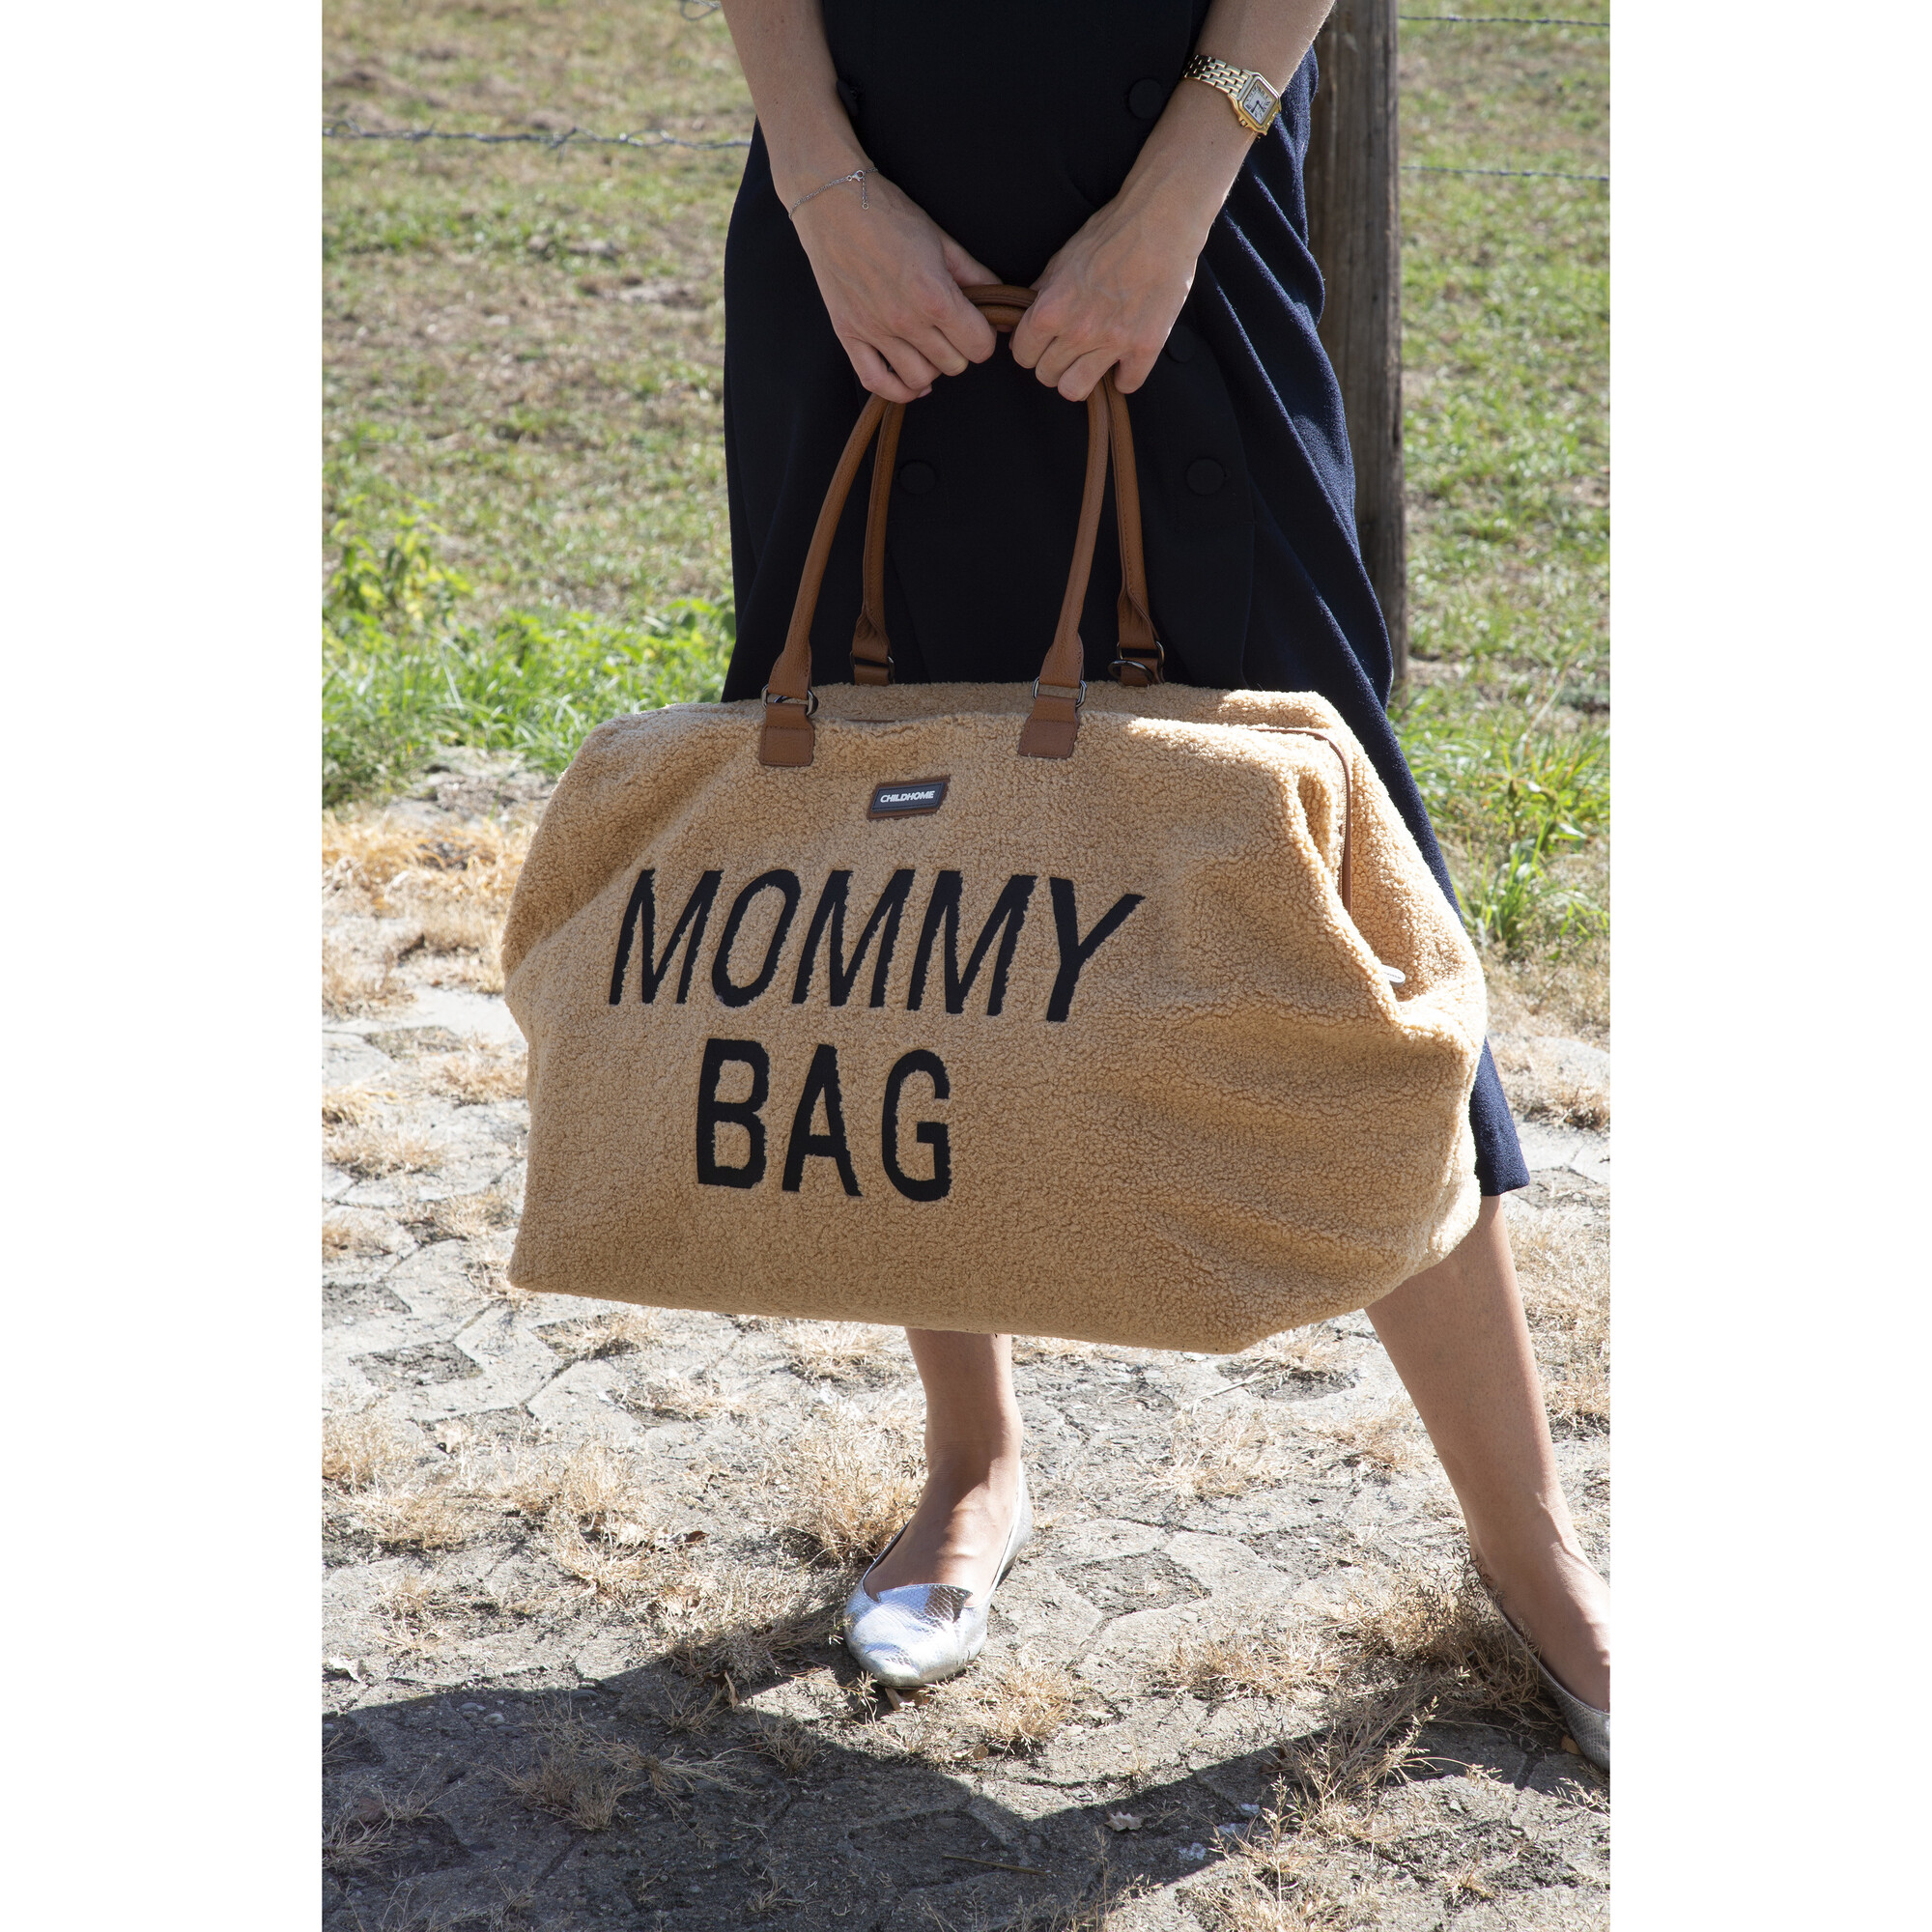 BEABA Childhome Mommy Bag - Teddy Brown